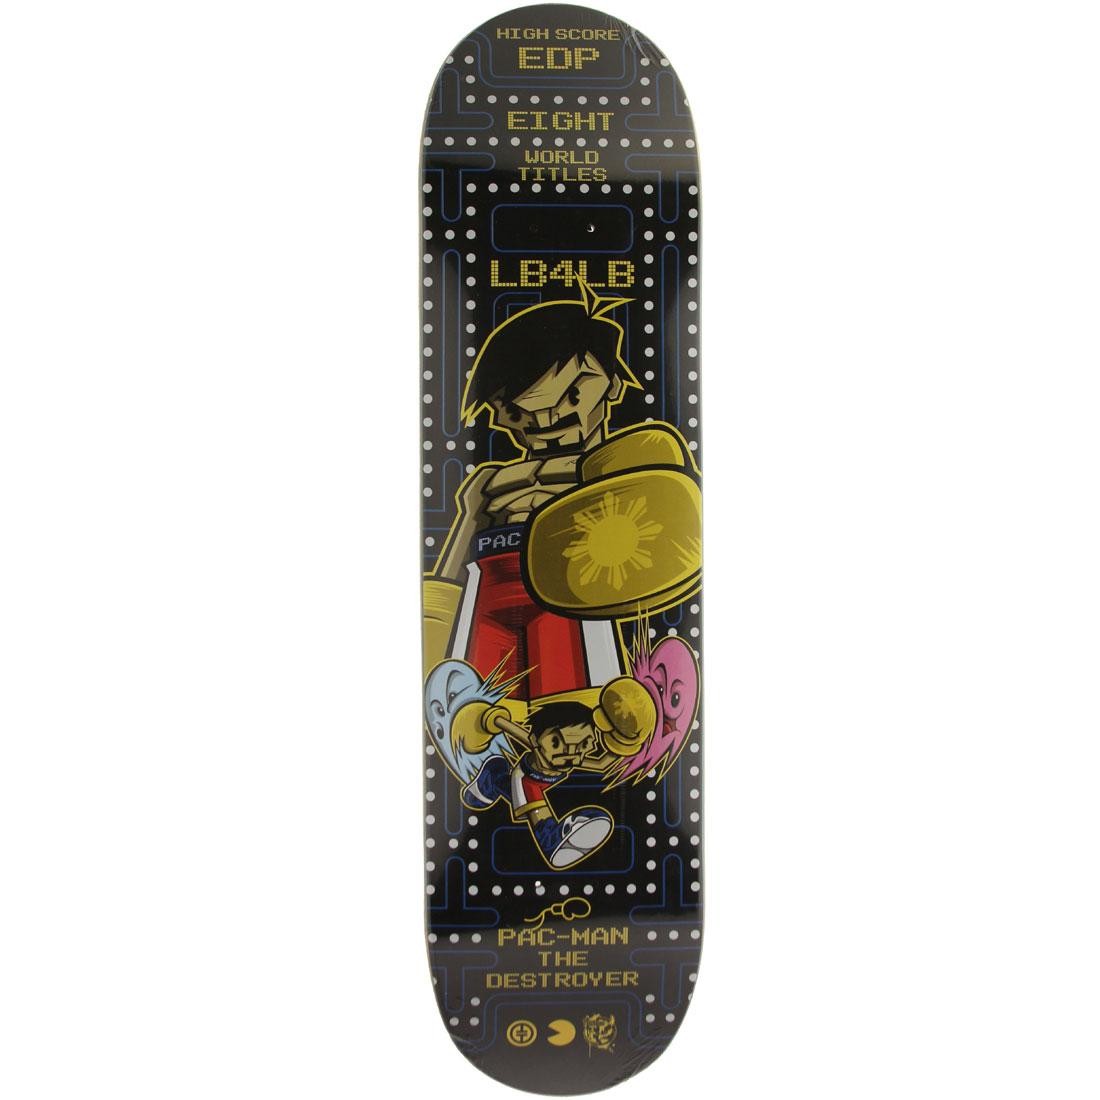 Pacman Limited Edition The Destroyer Skateboard Deck (black / multi)